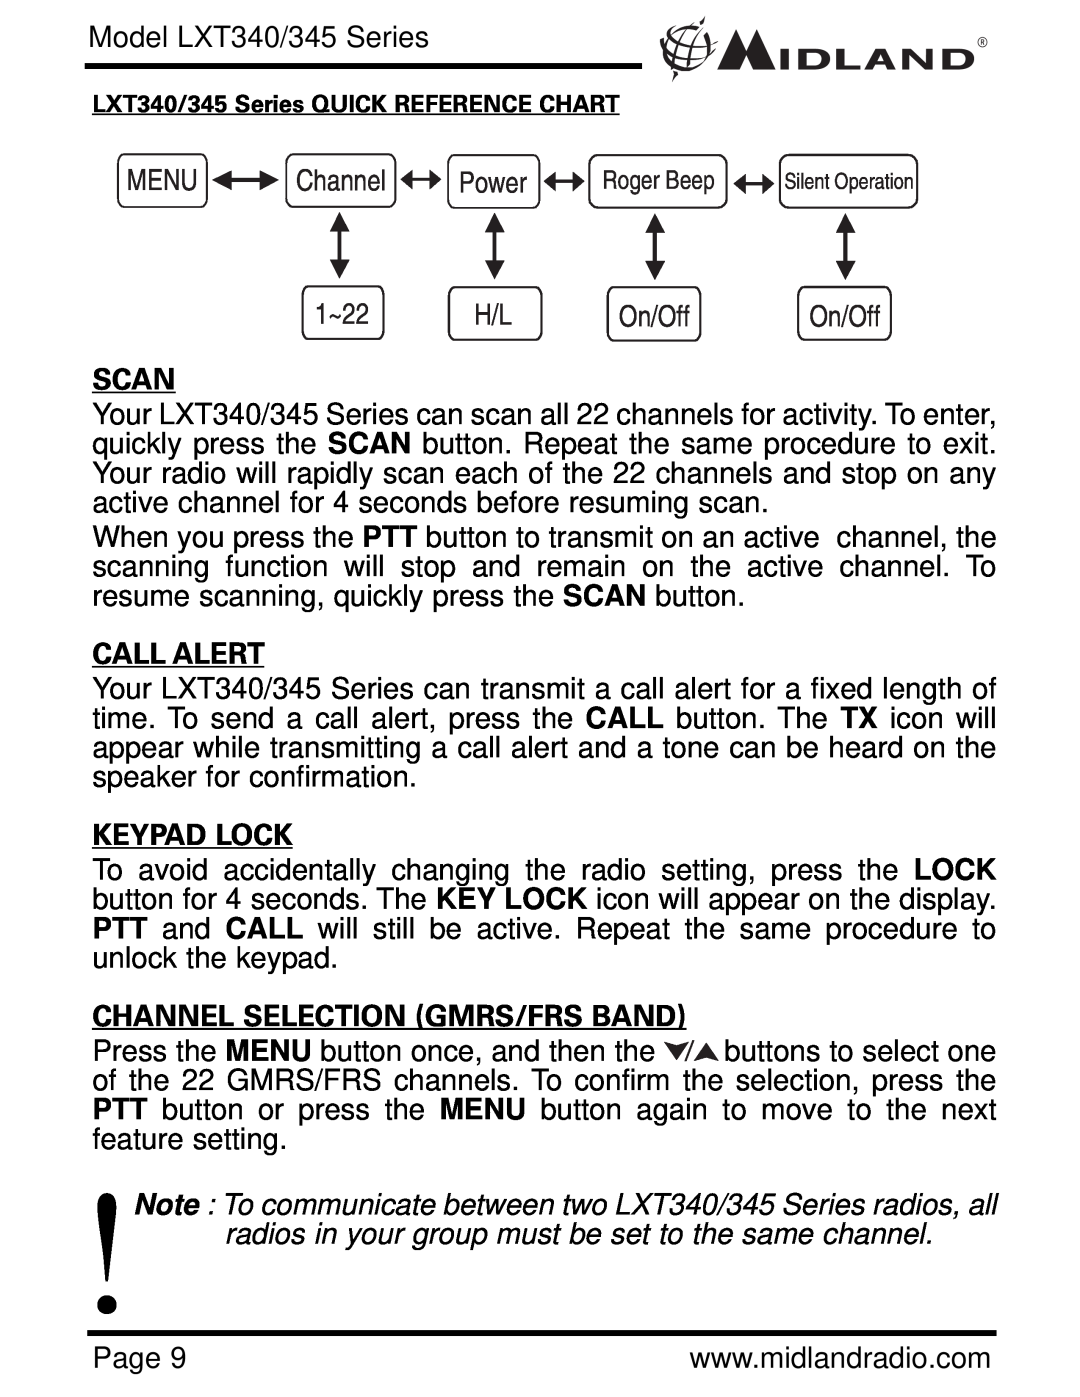 Midland Radio LXT345 Series owner manual Model LXT340/345 Series, MENU Channel Power, On/Off, Scan, Call Alert, Keypad Lock 